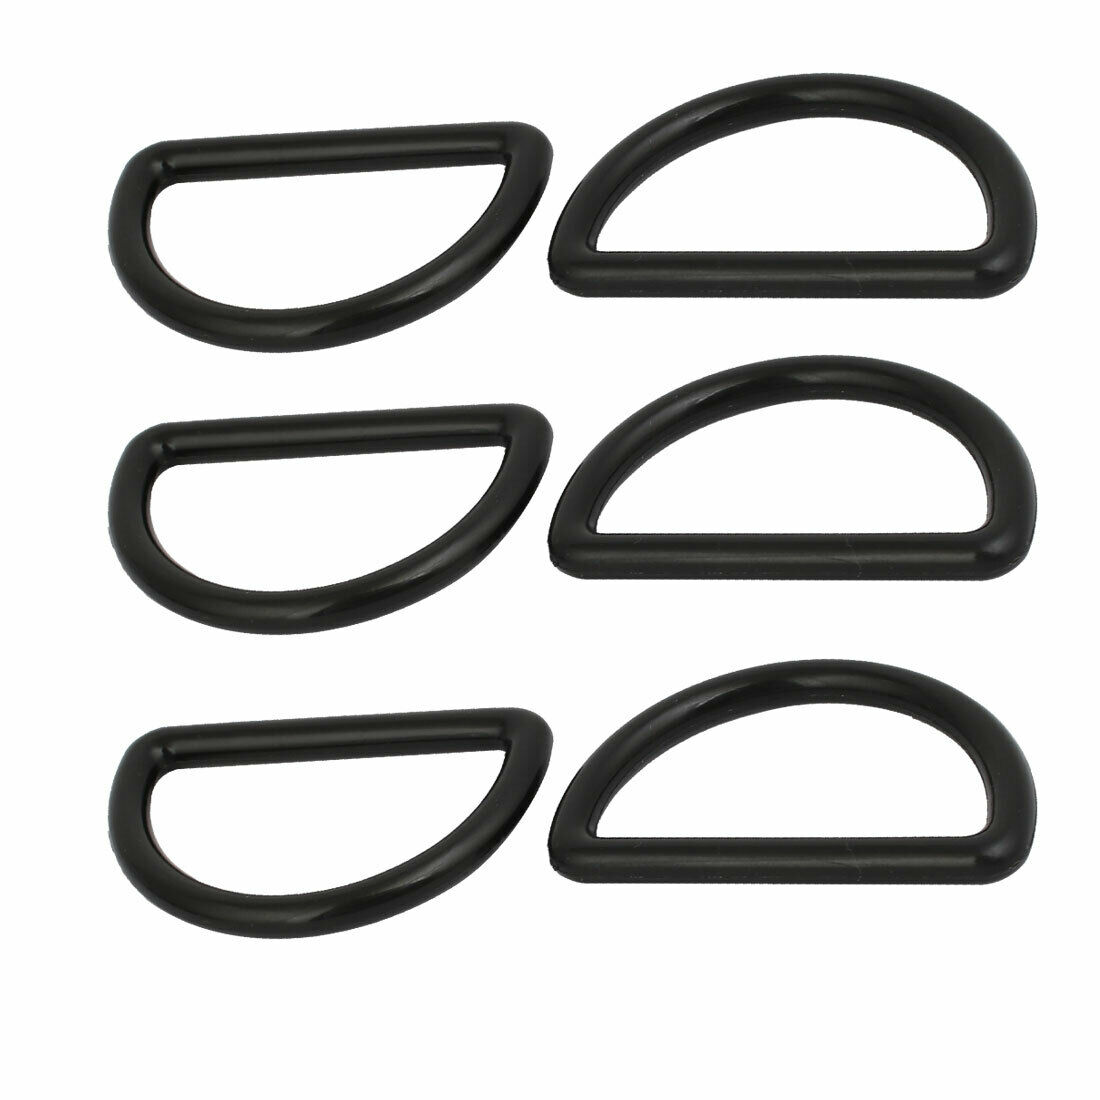 45mm Inner Width Plastic D Ring Belt Buckle Accessories Black 6pcs